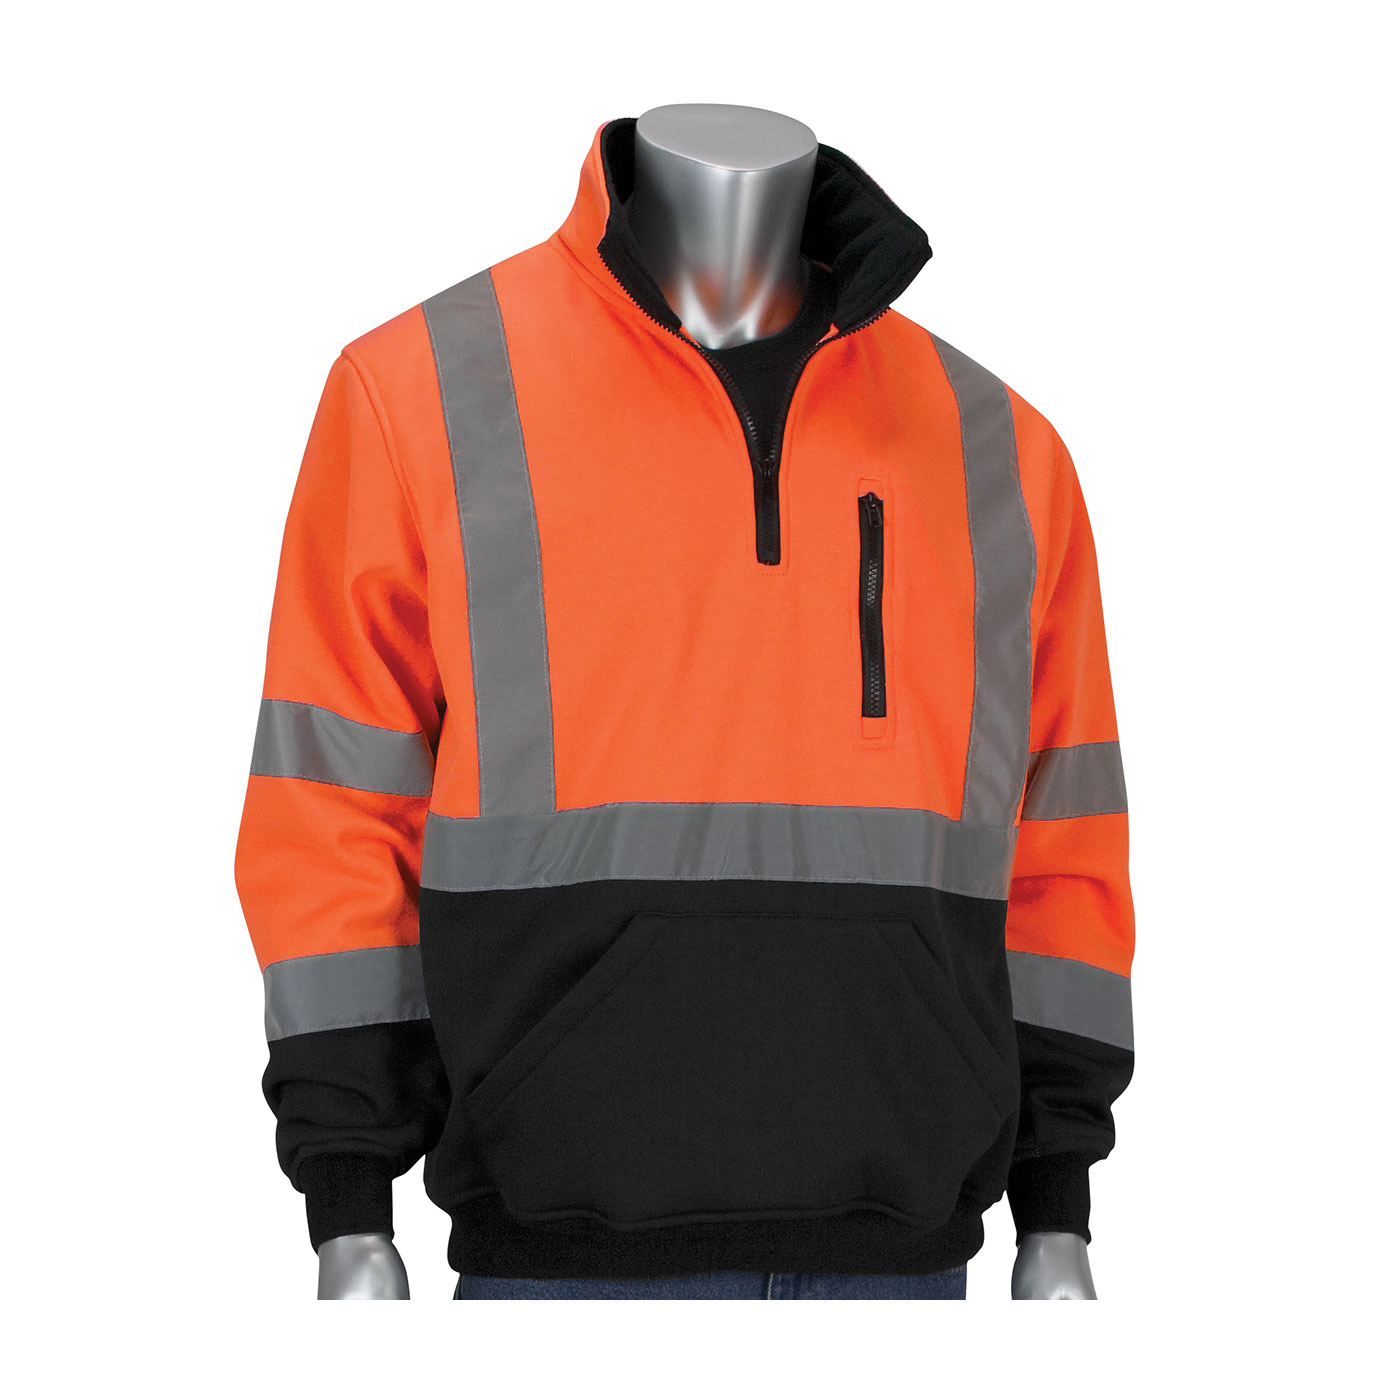 PIP® 323-1330B-OR/5X Sweatshirt With Black Bottom, Unisex, 5XL, Orange, 33.9 in L, Polyester Fleece